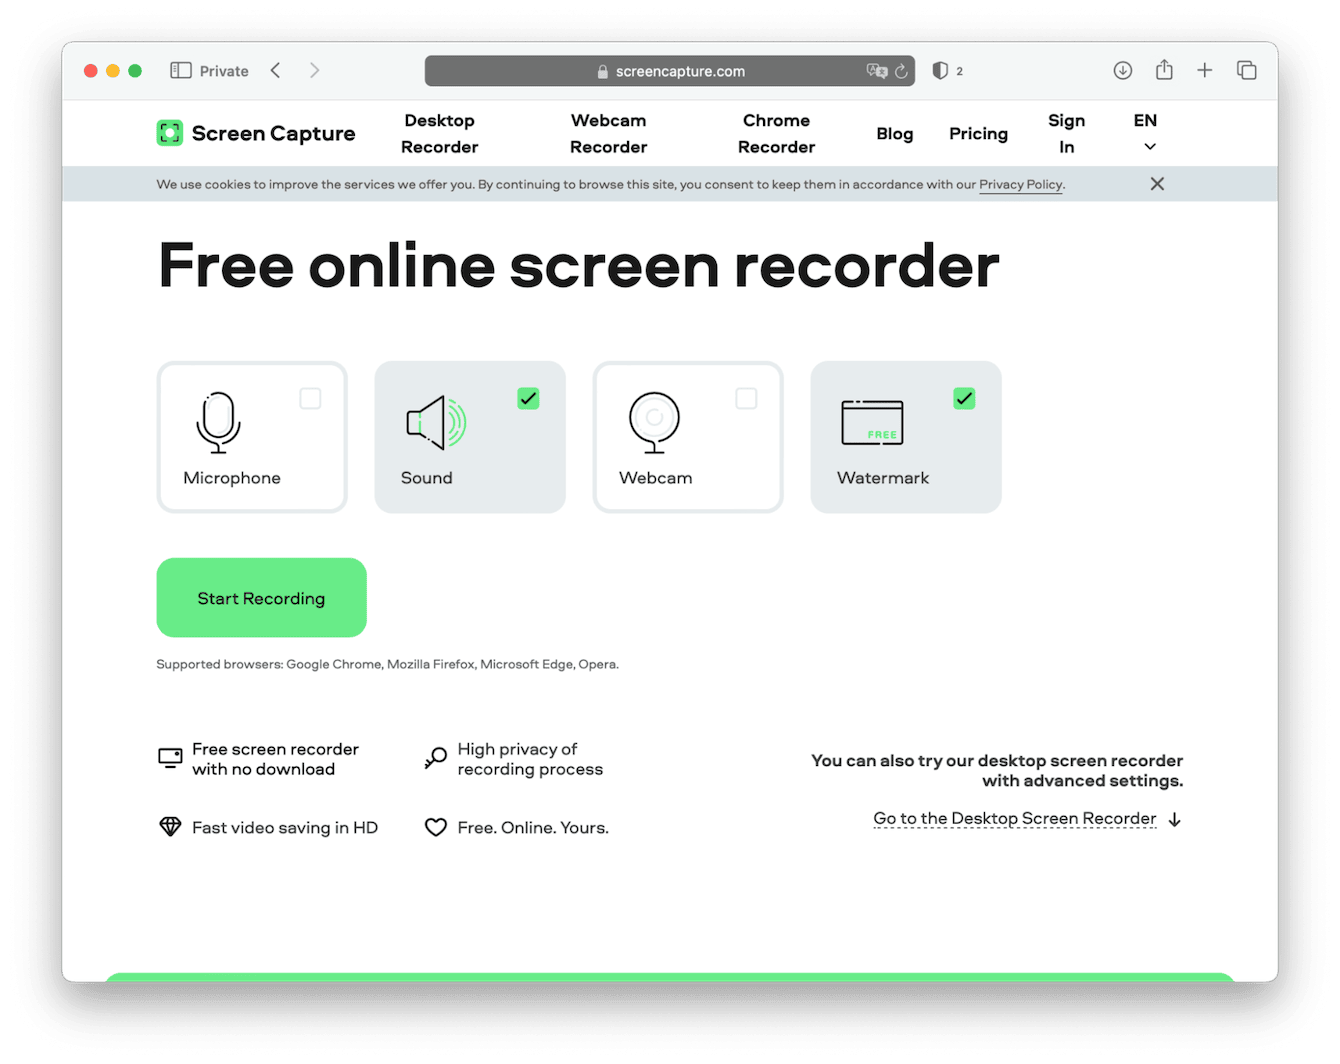 How to audio record on Mac using screencapture.com